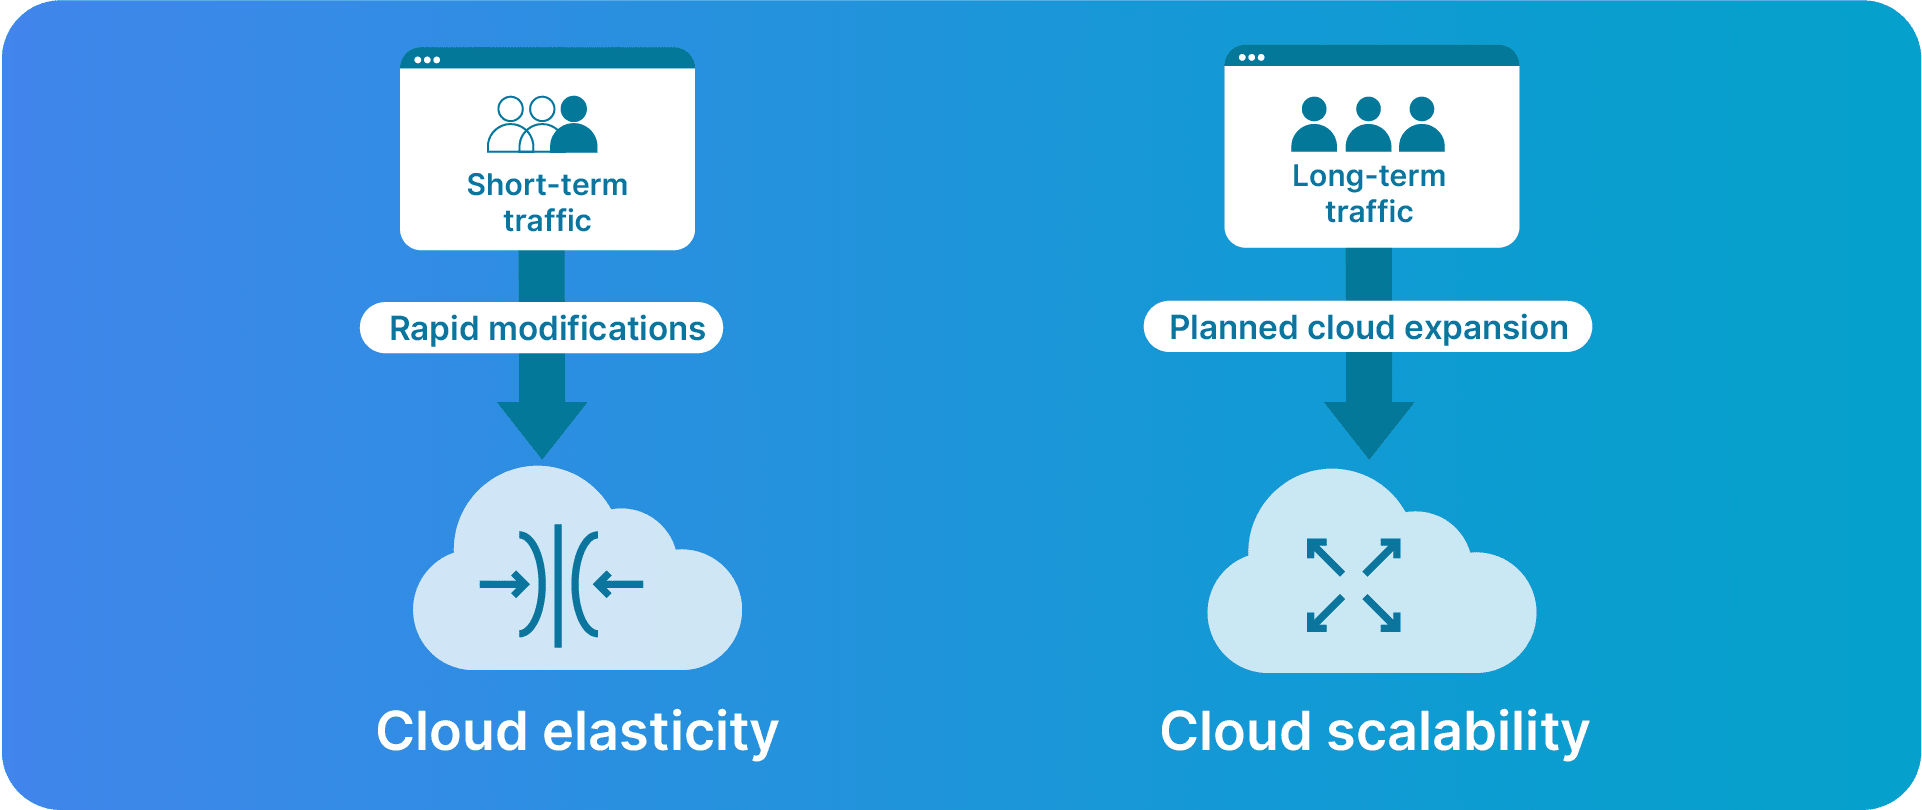 Cloud elasticity vs. cloud scalability.